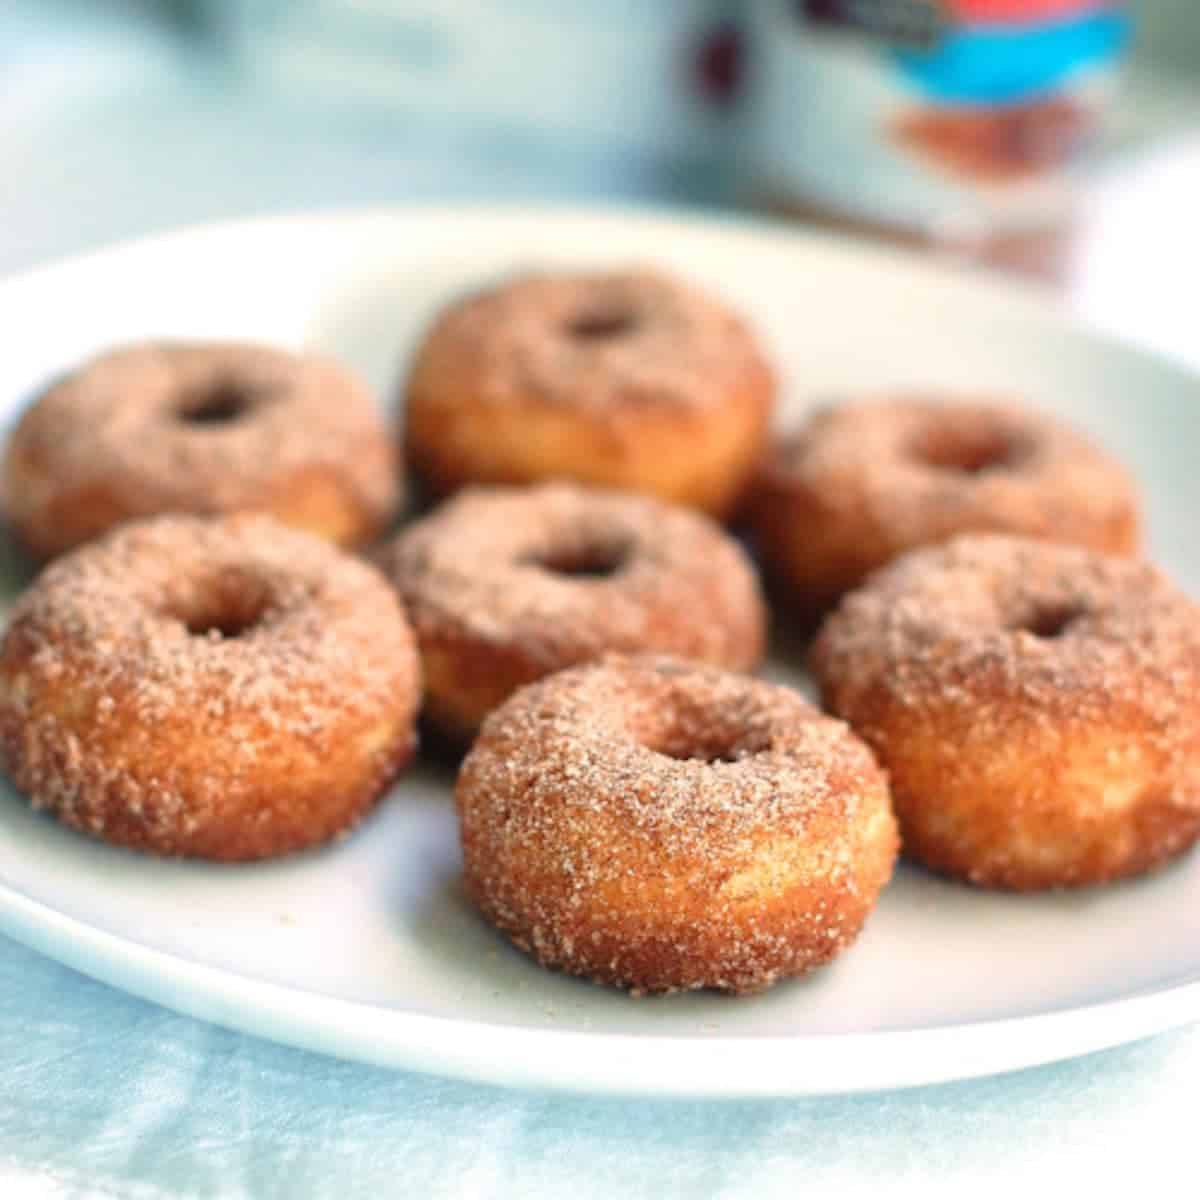 Cinnamon sugar mini donuts on a plate.